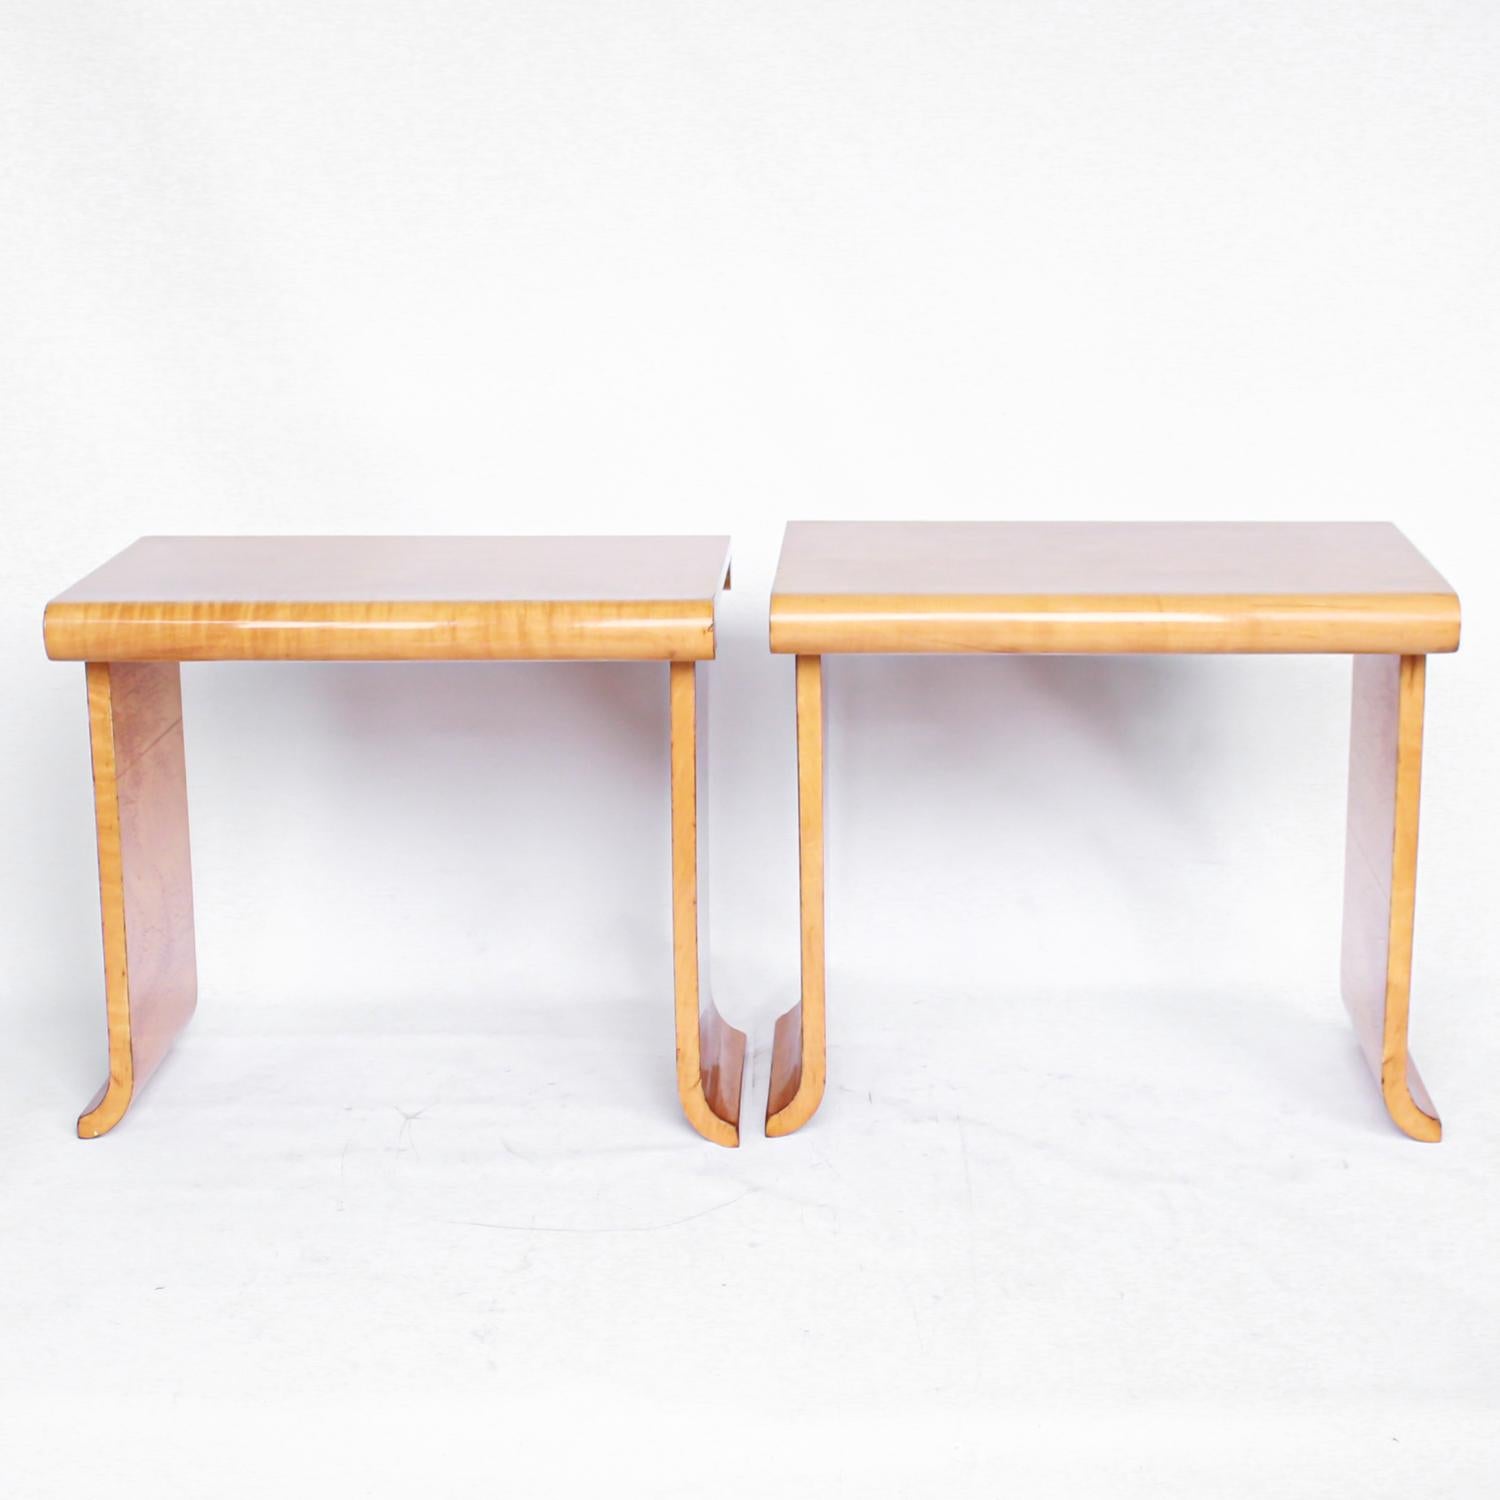 An Art Deco, pair of Epstein side tables in satin birch.

Dimensions: H 49cm, W 55cm, D 38cm

Origin: English

Date: circa 1930

Item no: 2506193.